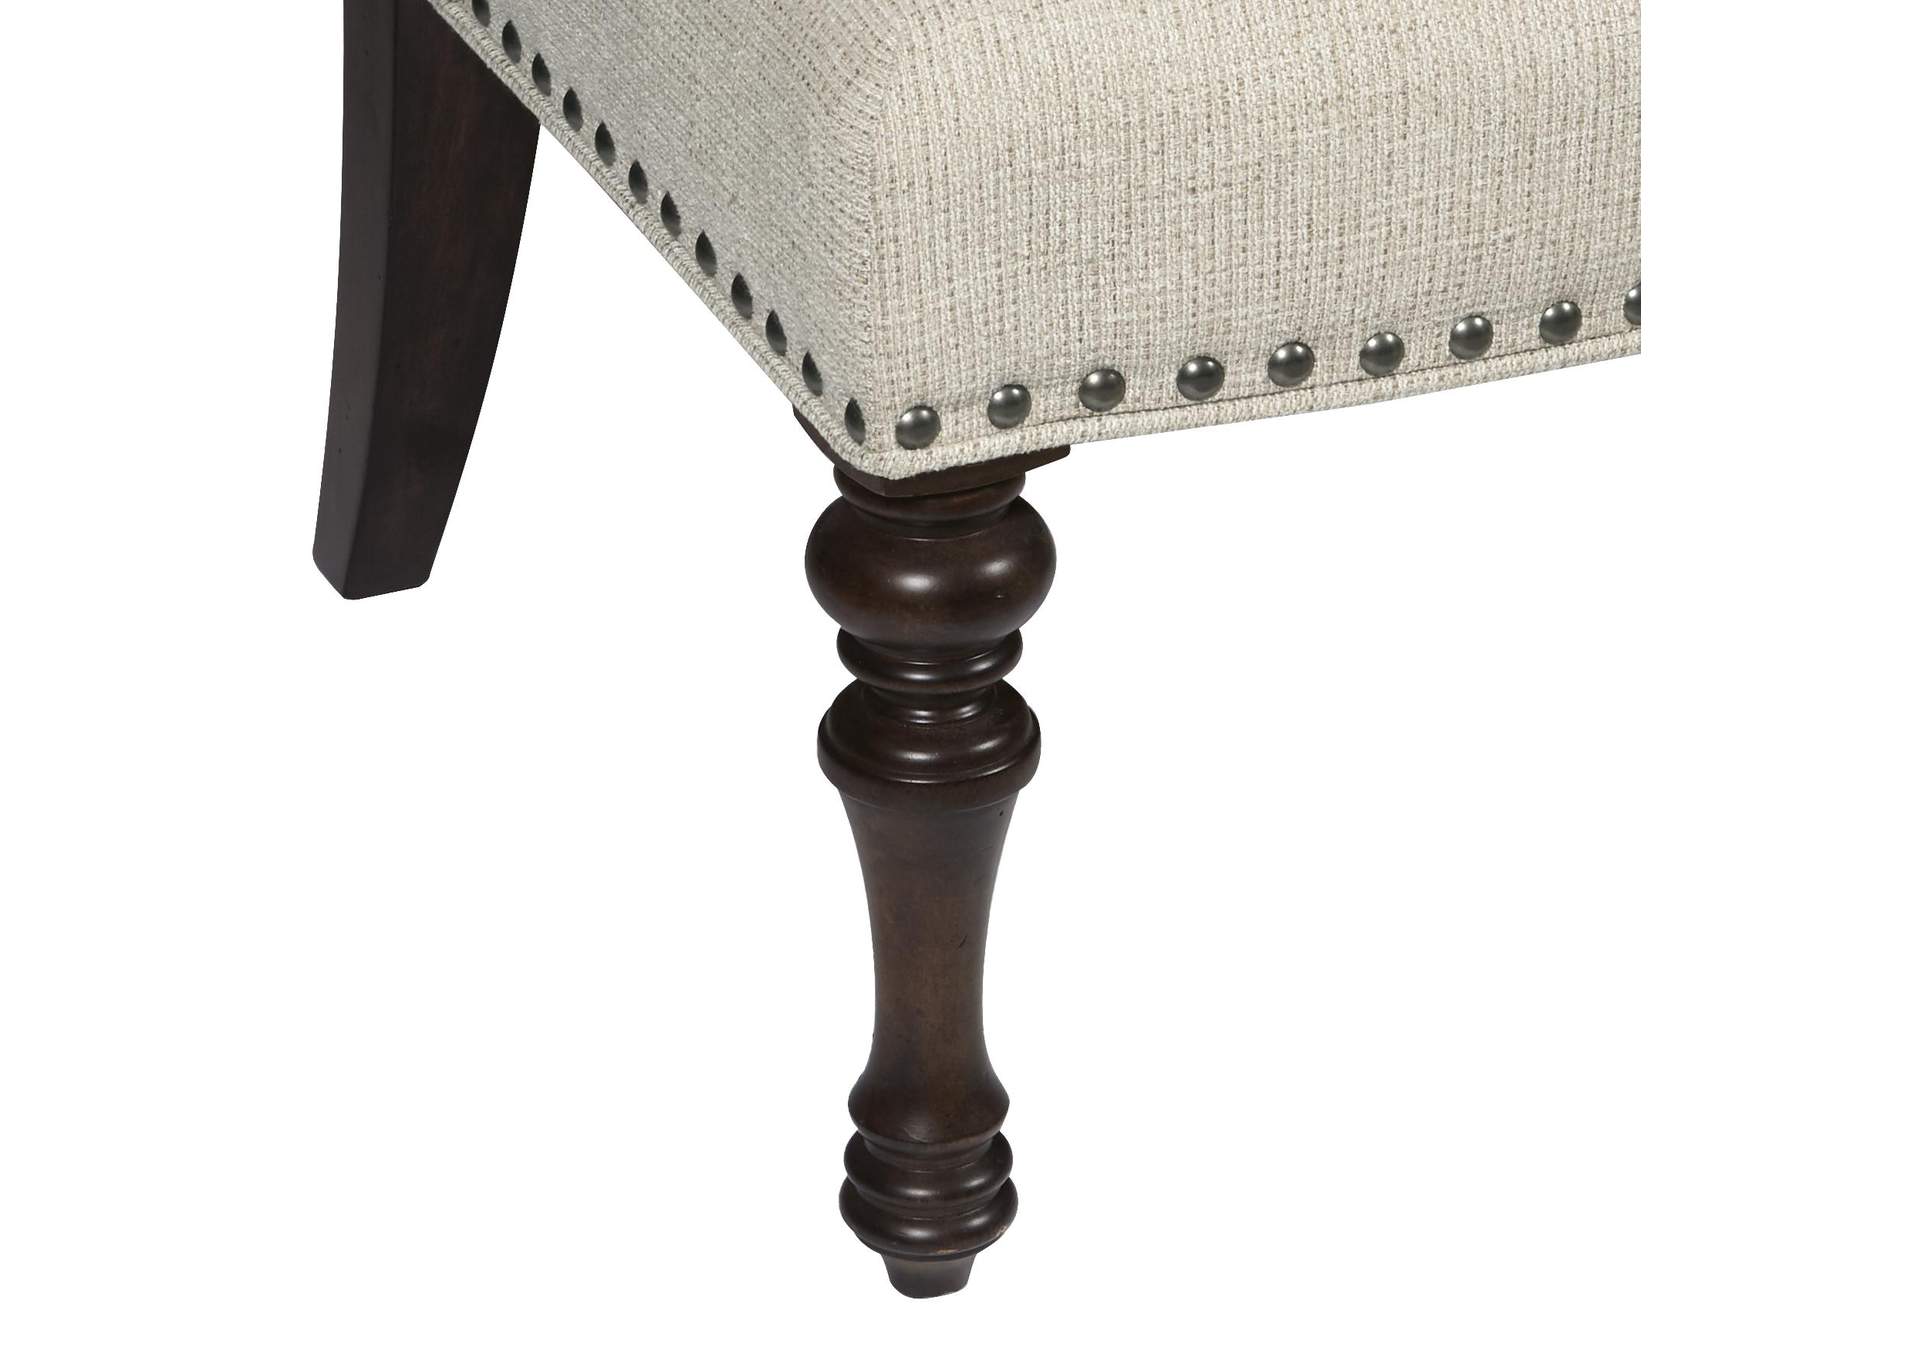 Cooper Falls Upholstered Host Wing Chair,Pulaski Furniture